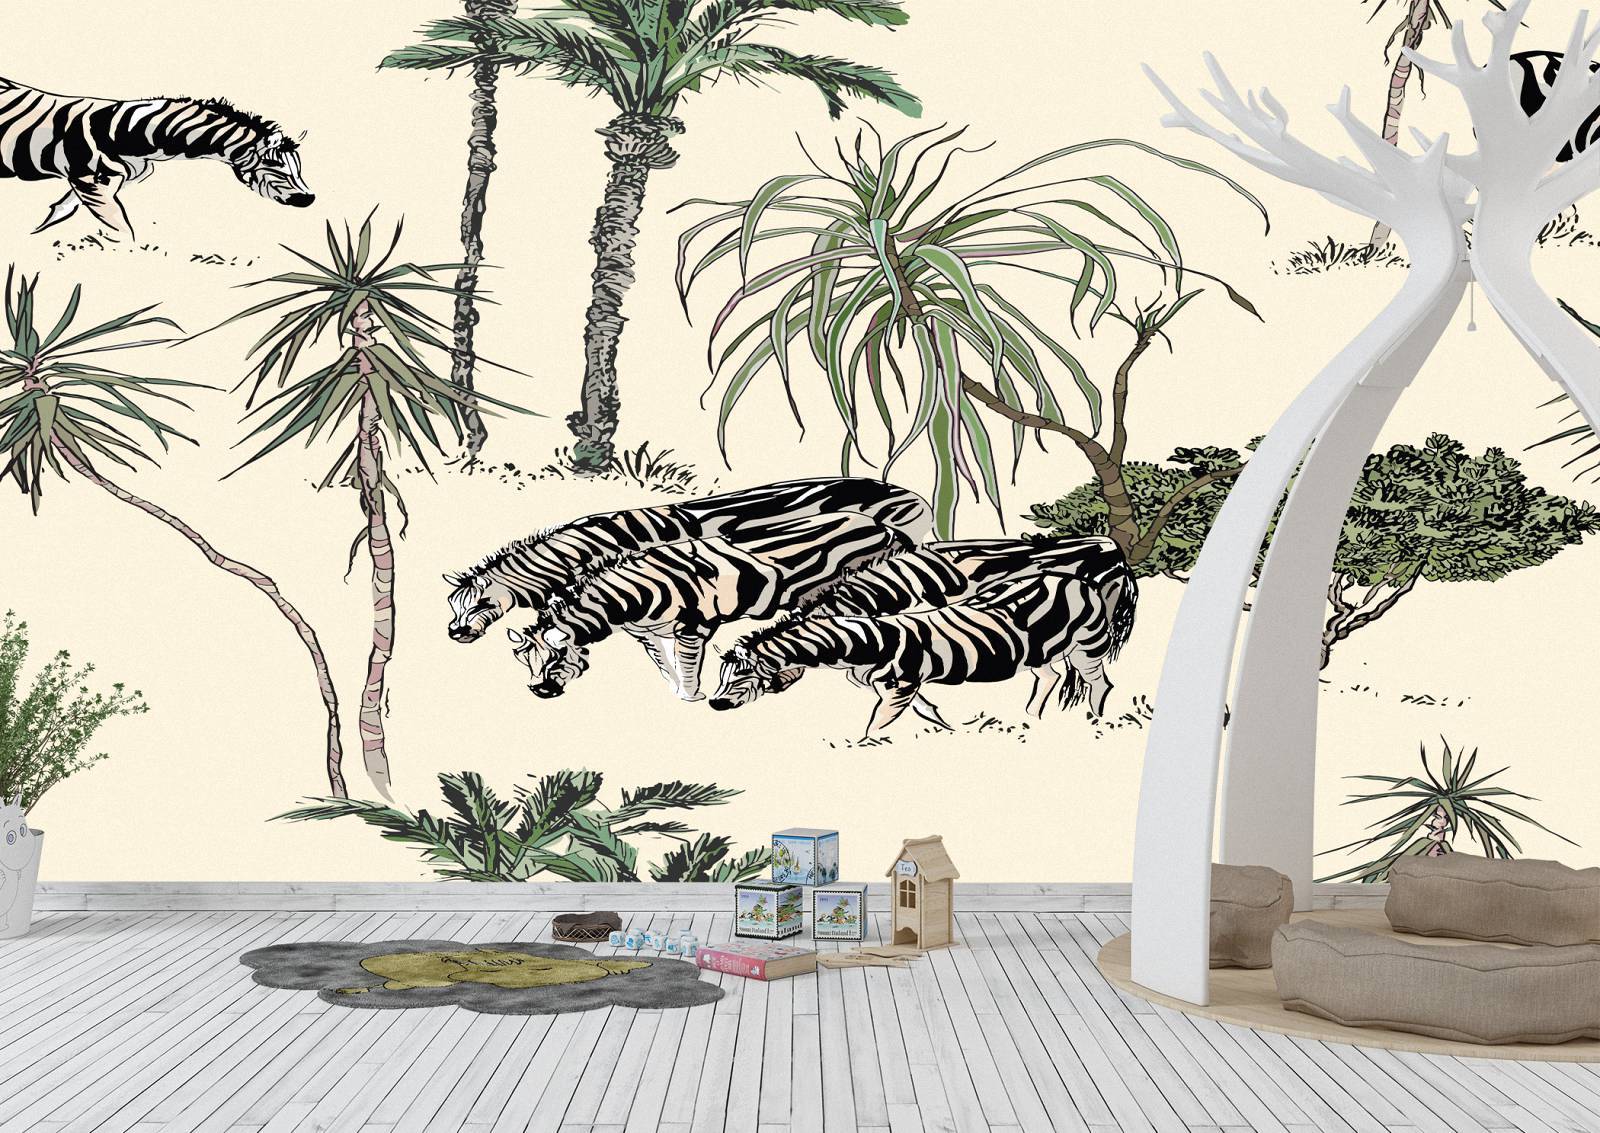 Zebras on Safari Kids Room Wall Mural Photo Wallpaper UV Print Decal Art Décor